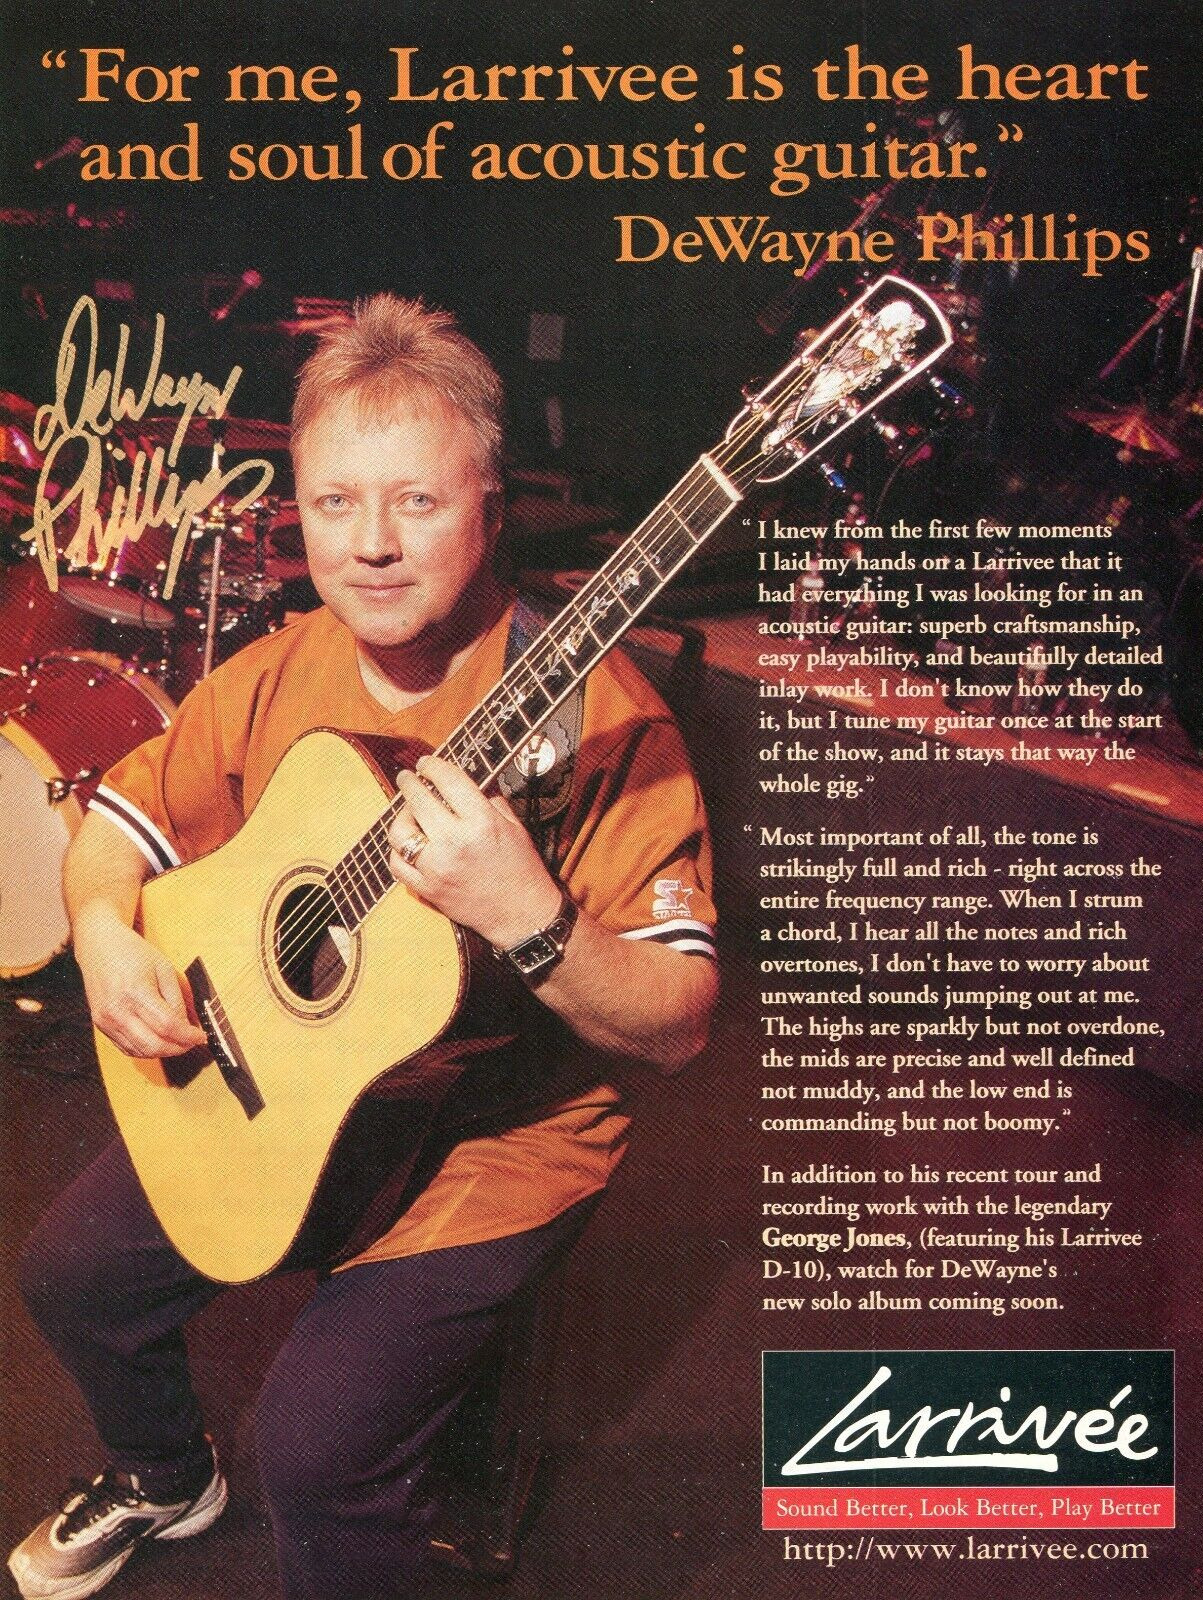 2000 Print Ad of Larrivee D10 Acoustic Guitar w DeWayne Phillips of George Jones